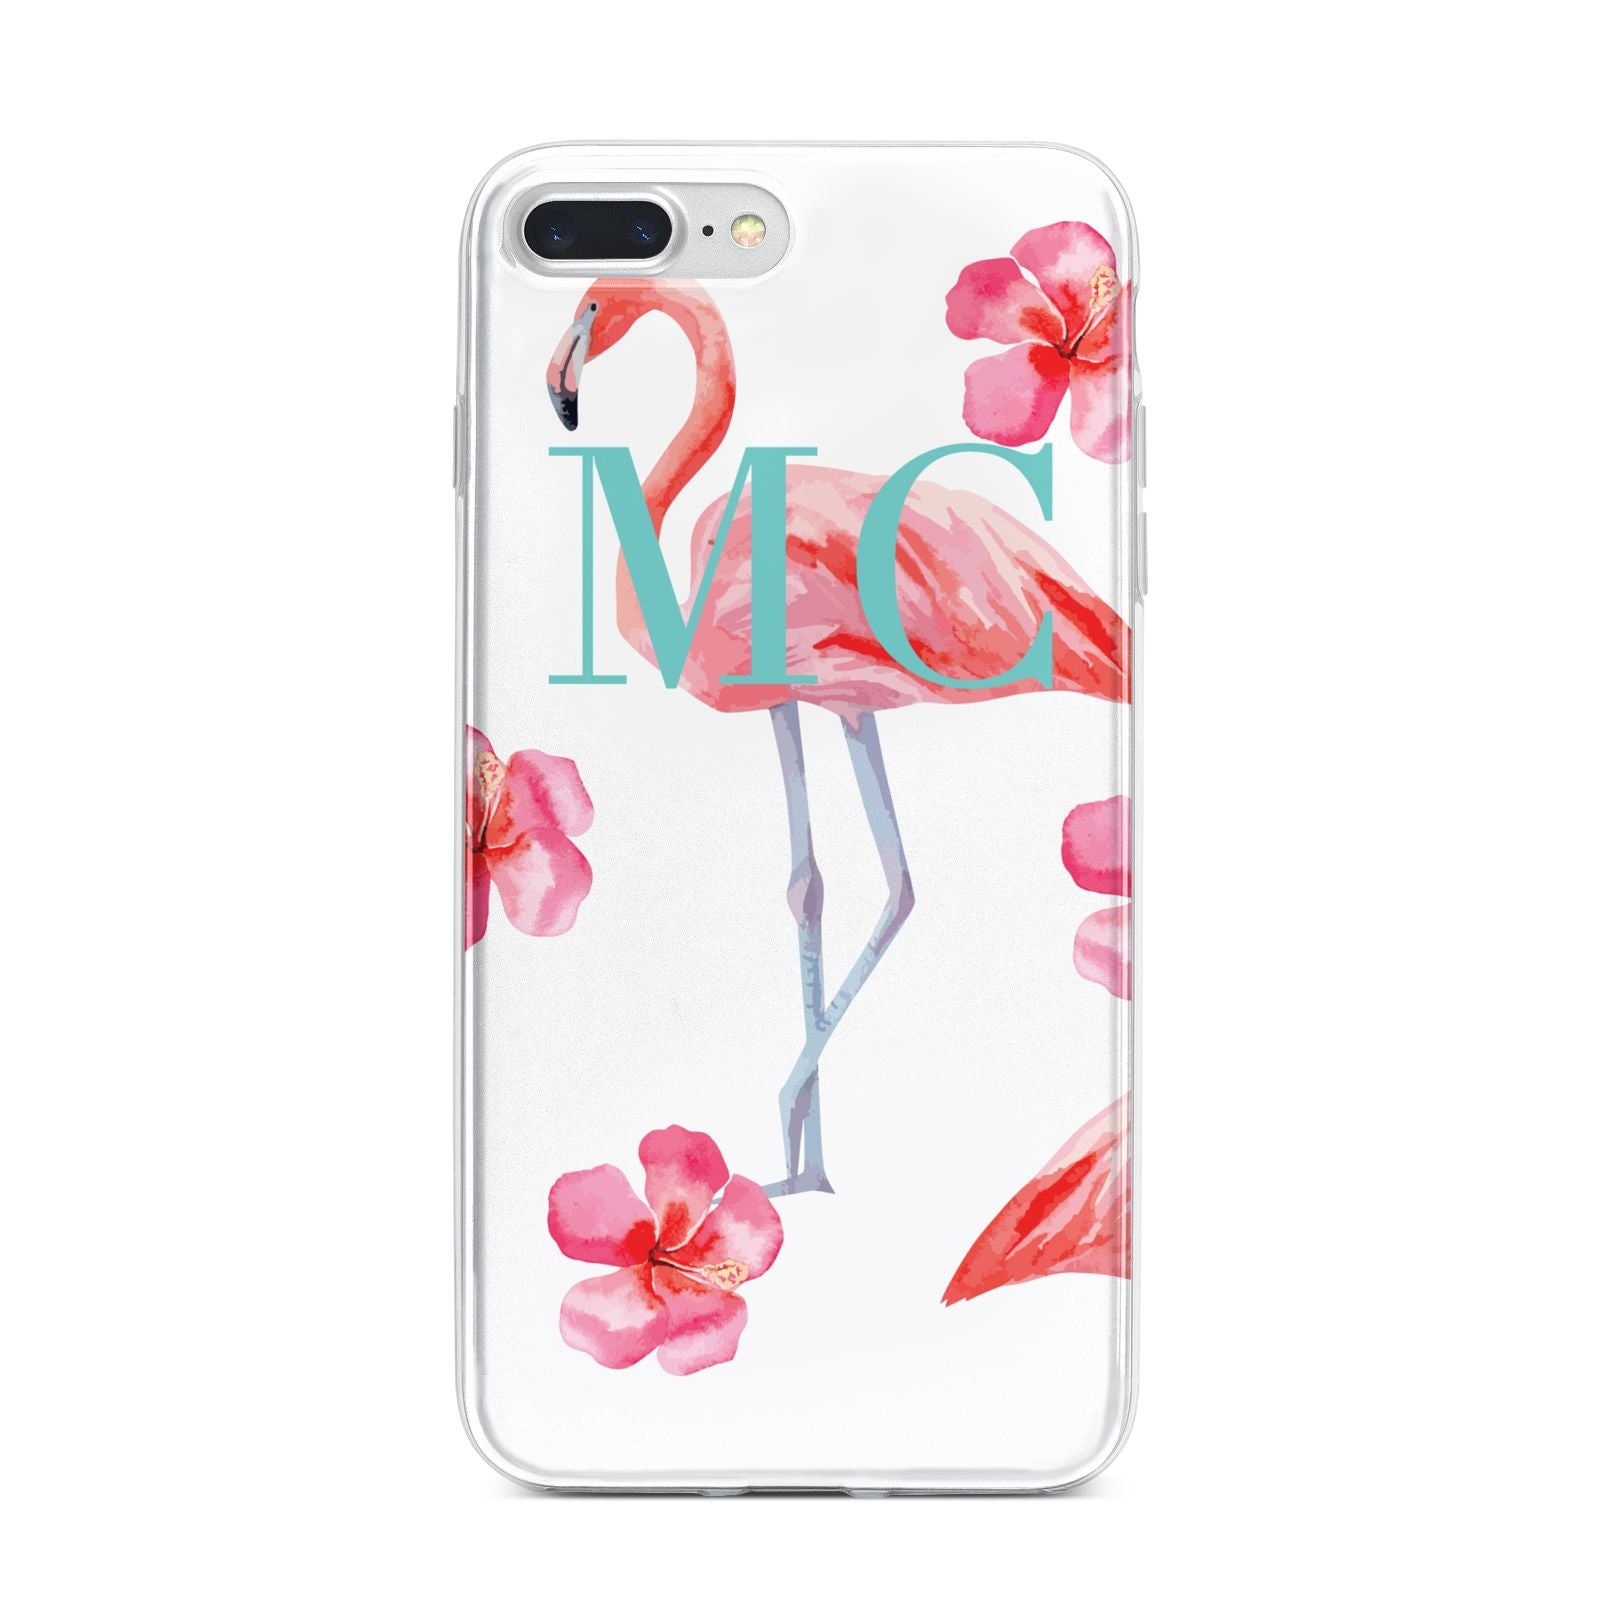 Personalised Initials Flamingo 3 iPhone 7 Plus Bumper Case on Silver iPhone